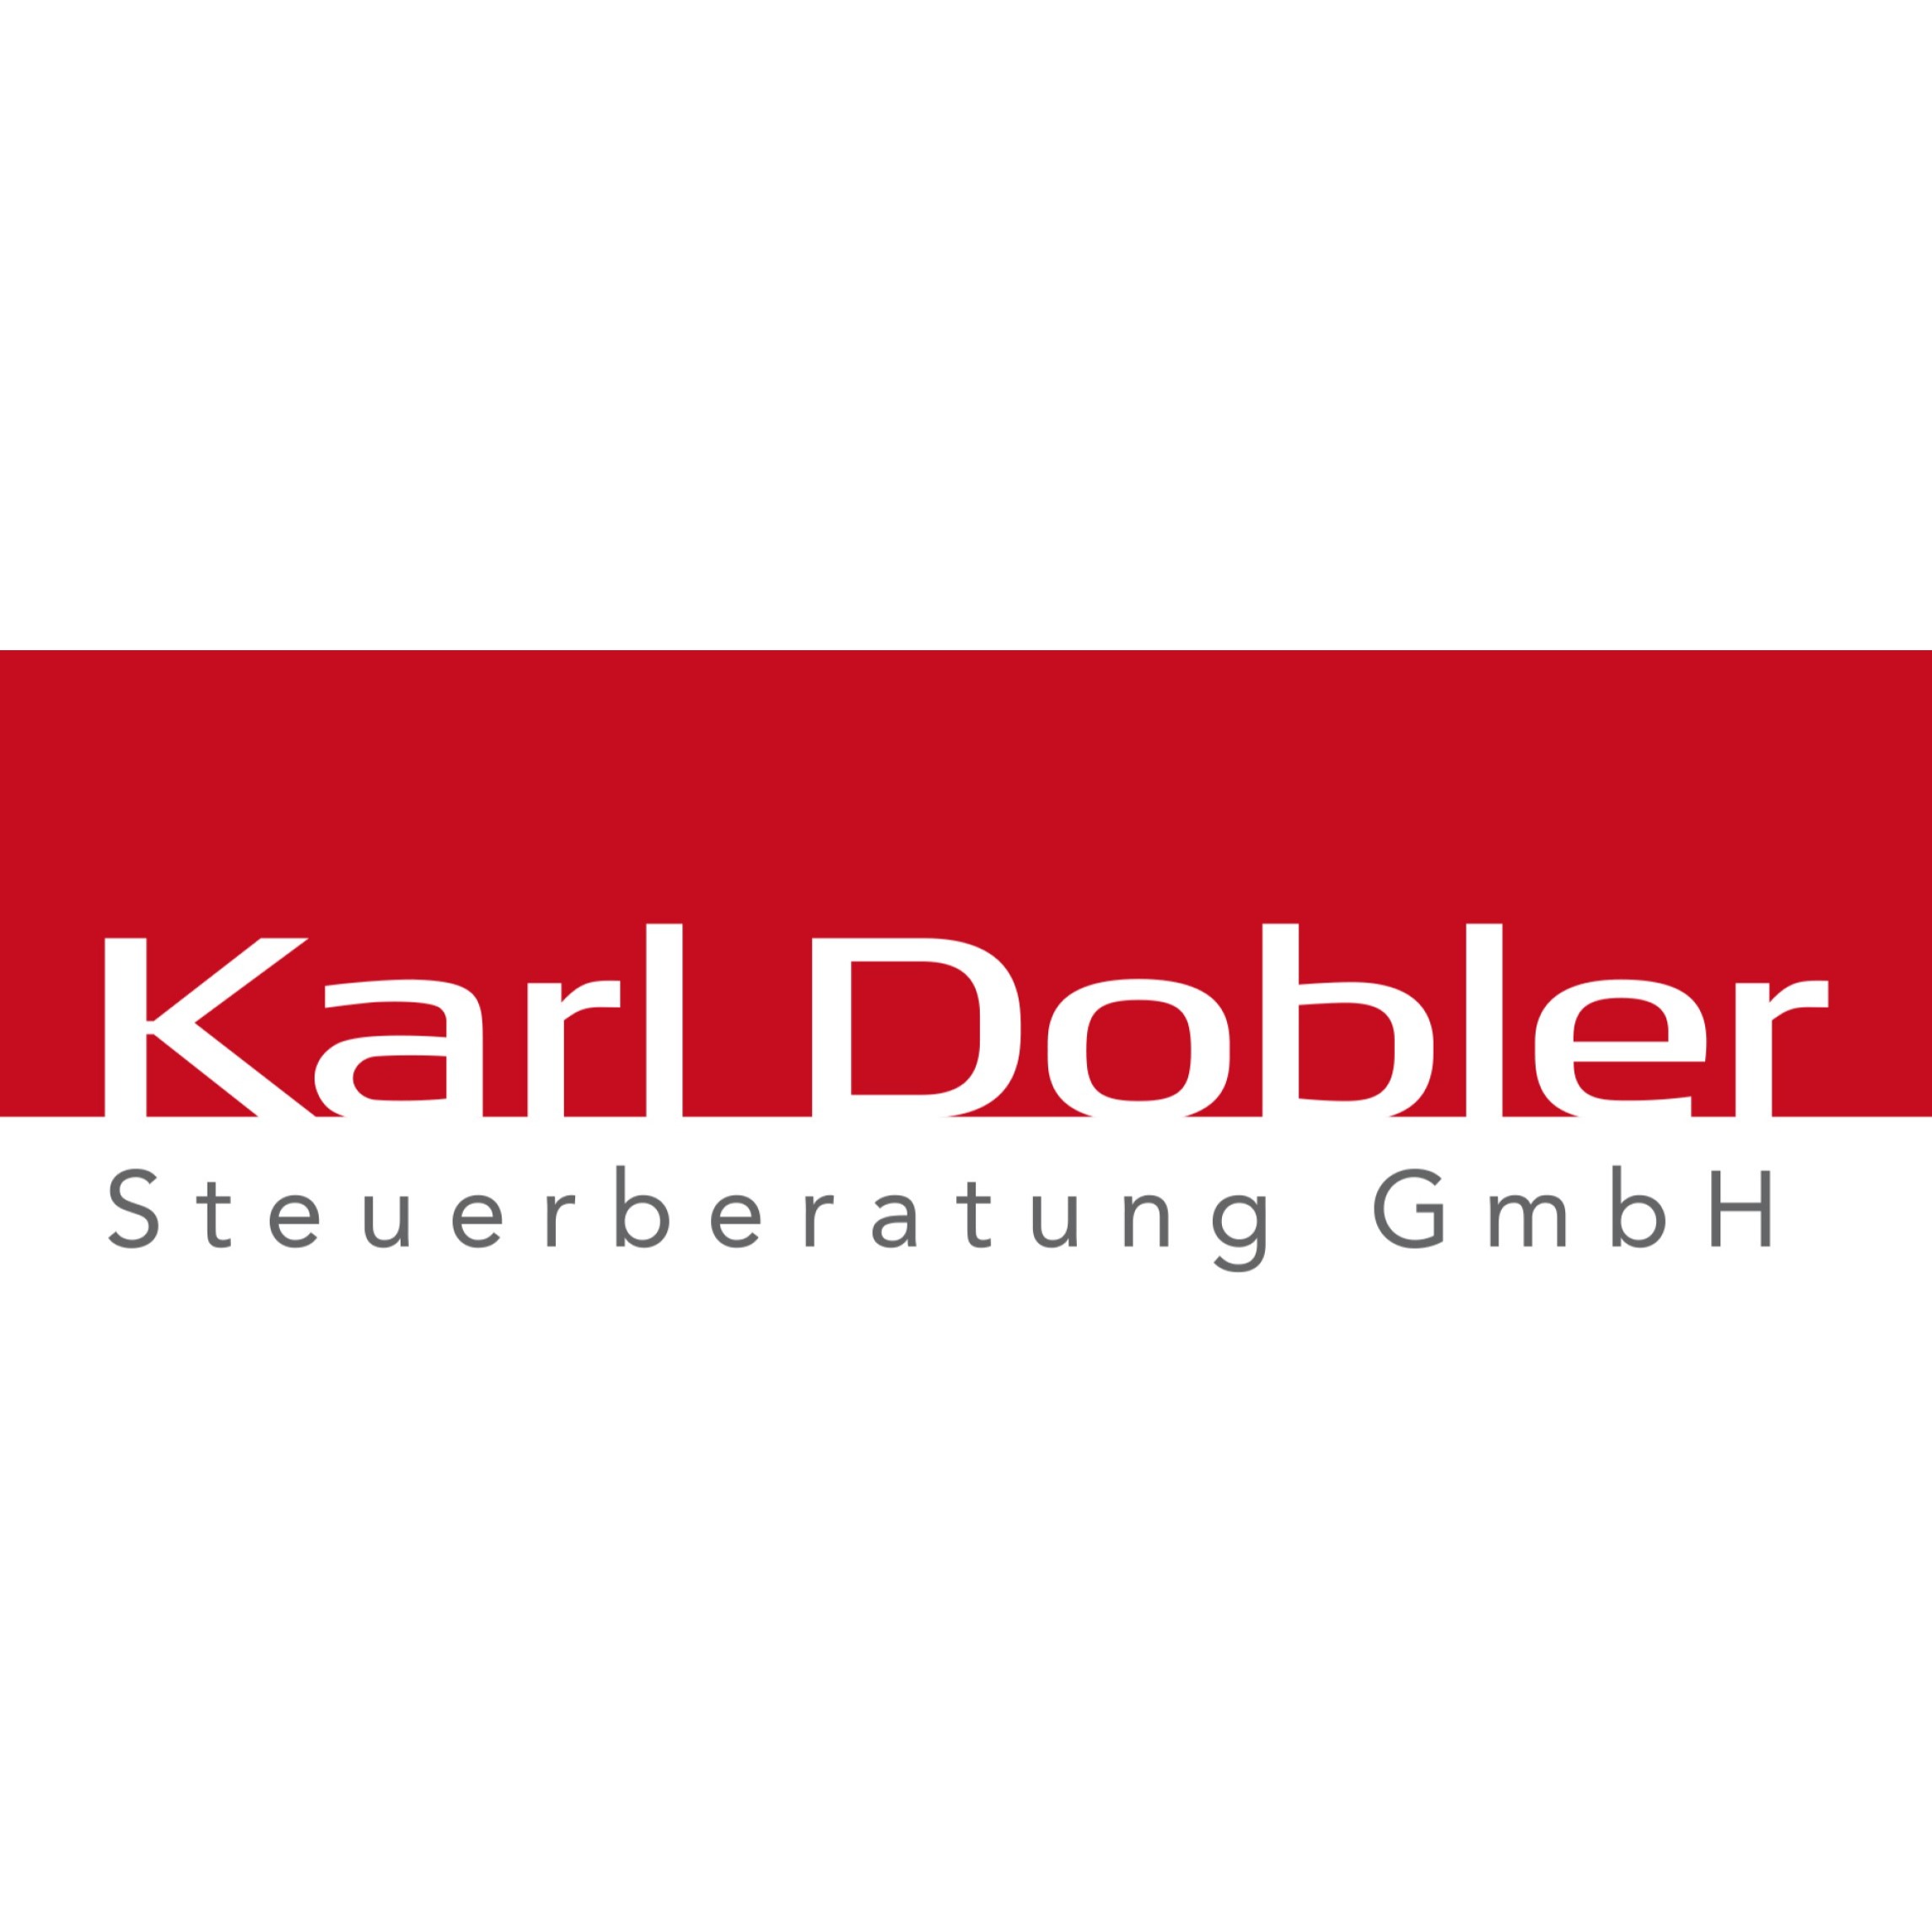 Karl Dobler Steuerberatung GmbH